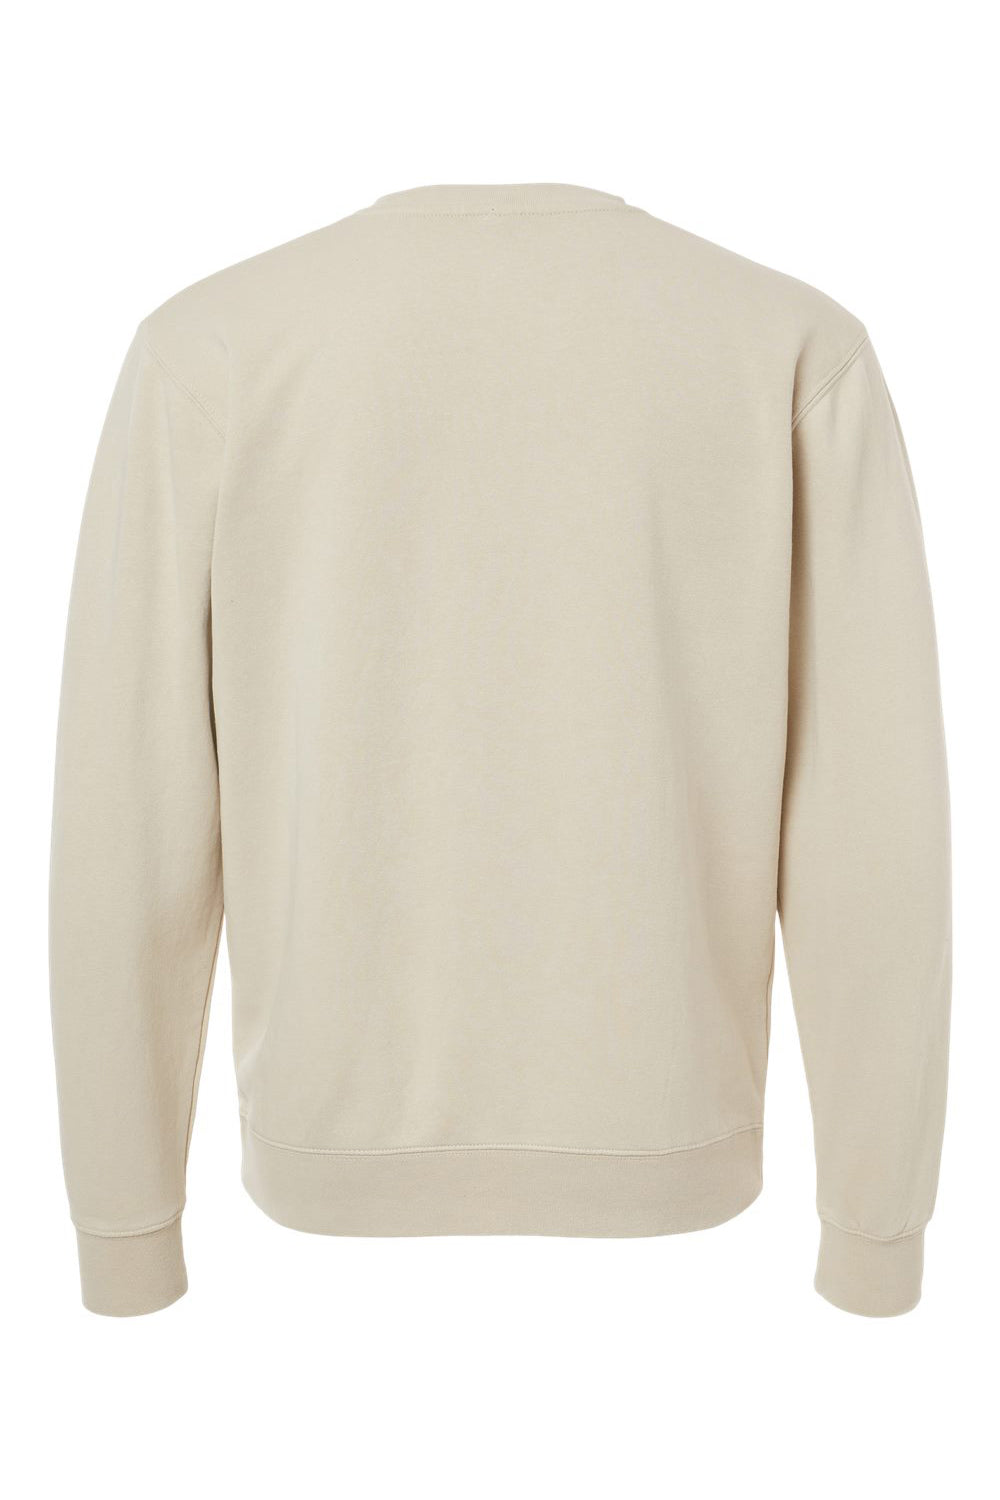 Independent Trading Co. PRM3500 Mens Pigment Dyed Crewneck Sweatshirt Ivory Flat Back